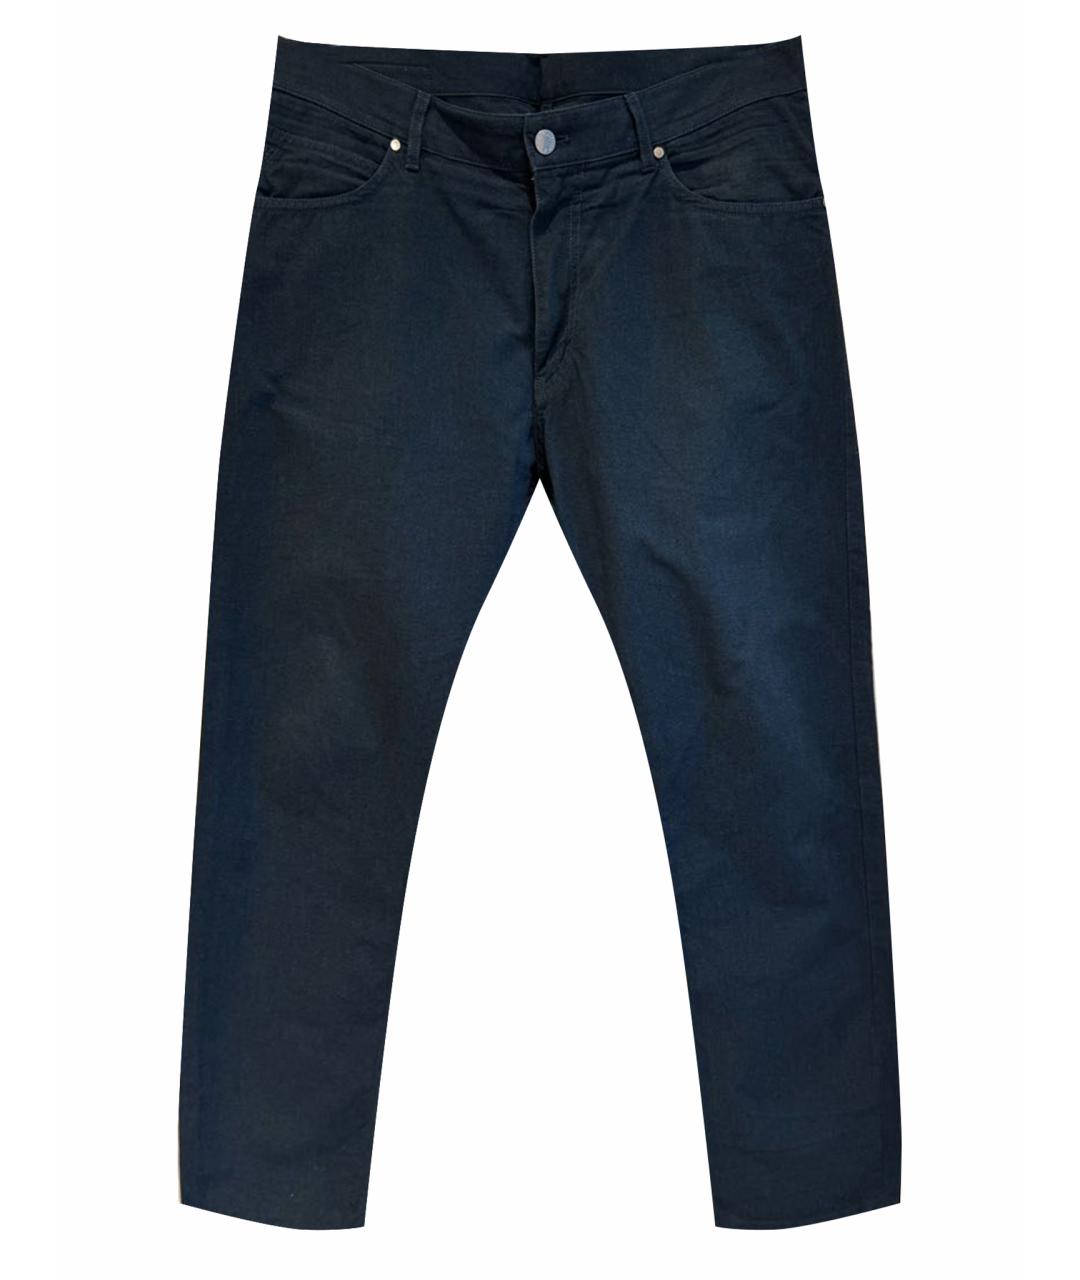 LOUIS VUITTON PRE-OWNED Темно-синие хлопковые джинсы скинни, фото 1